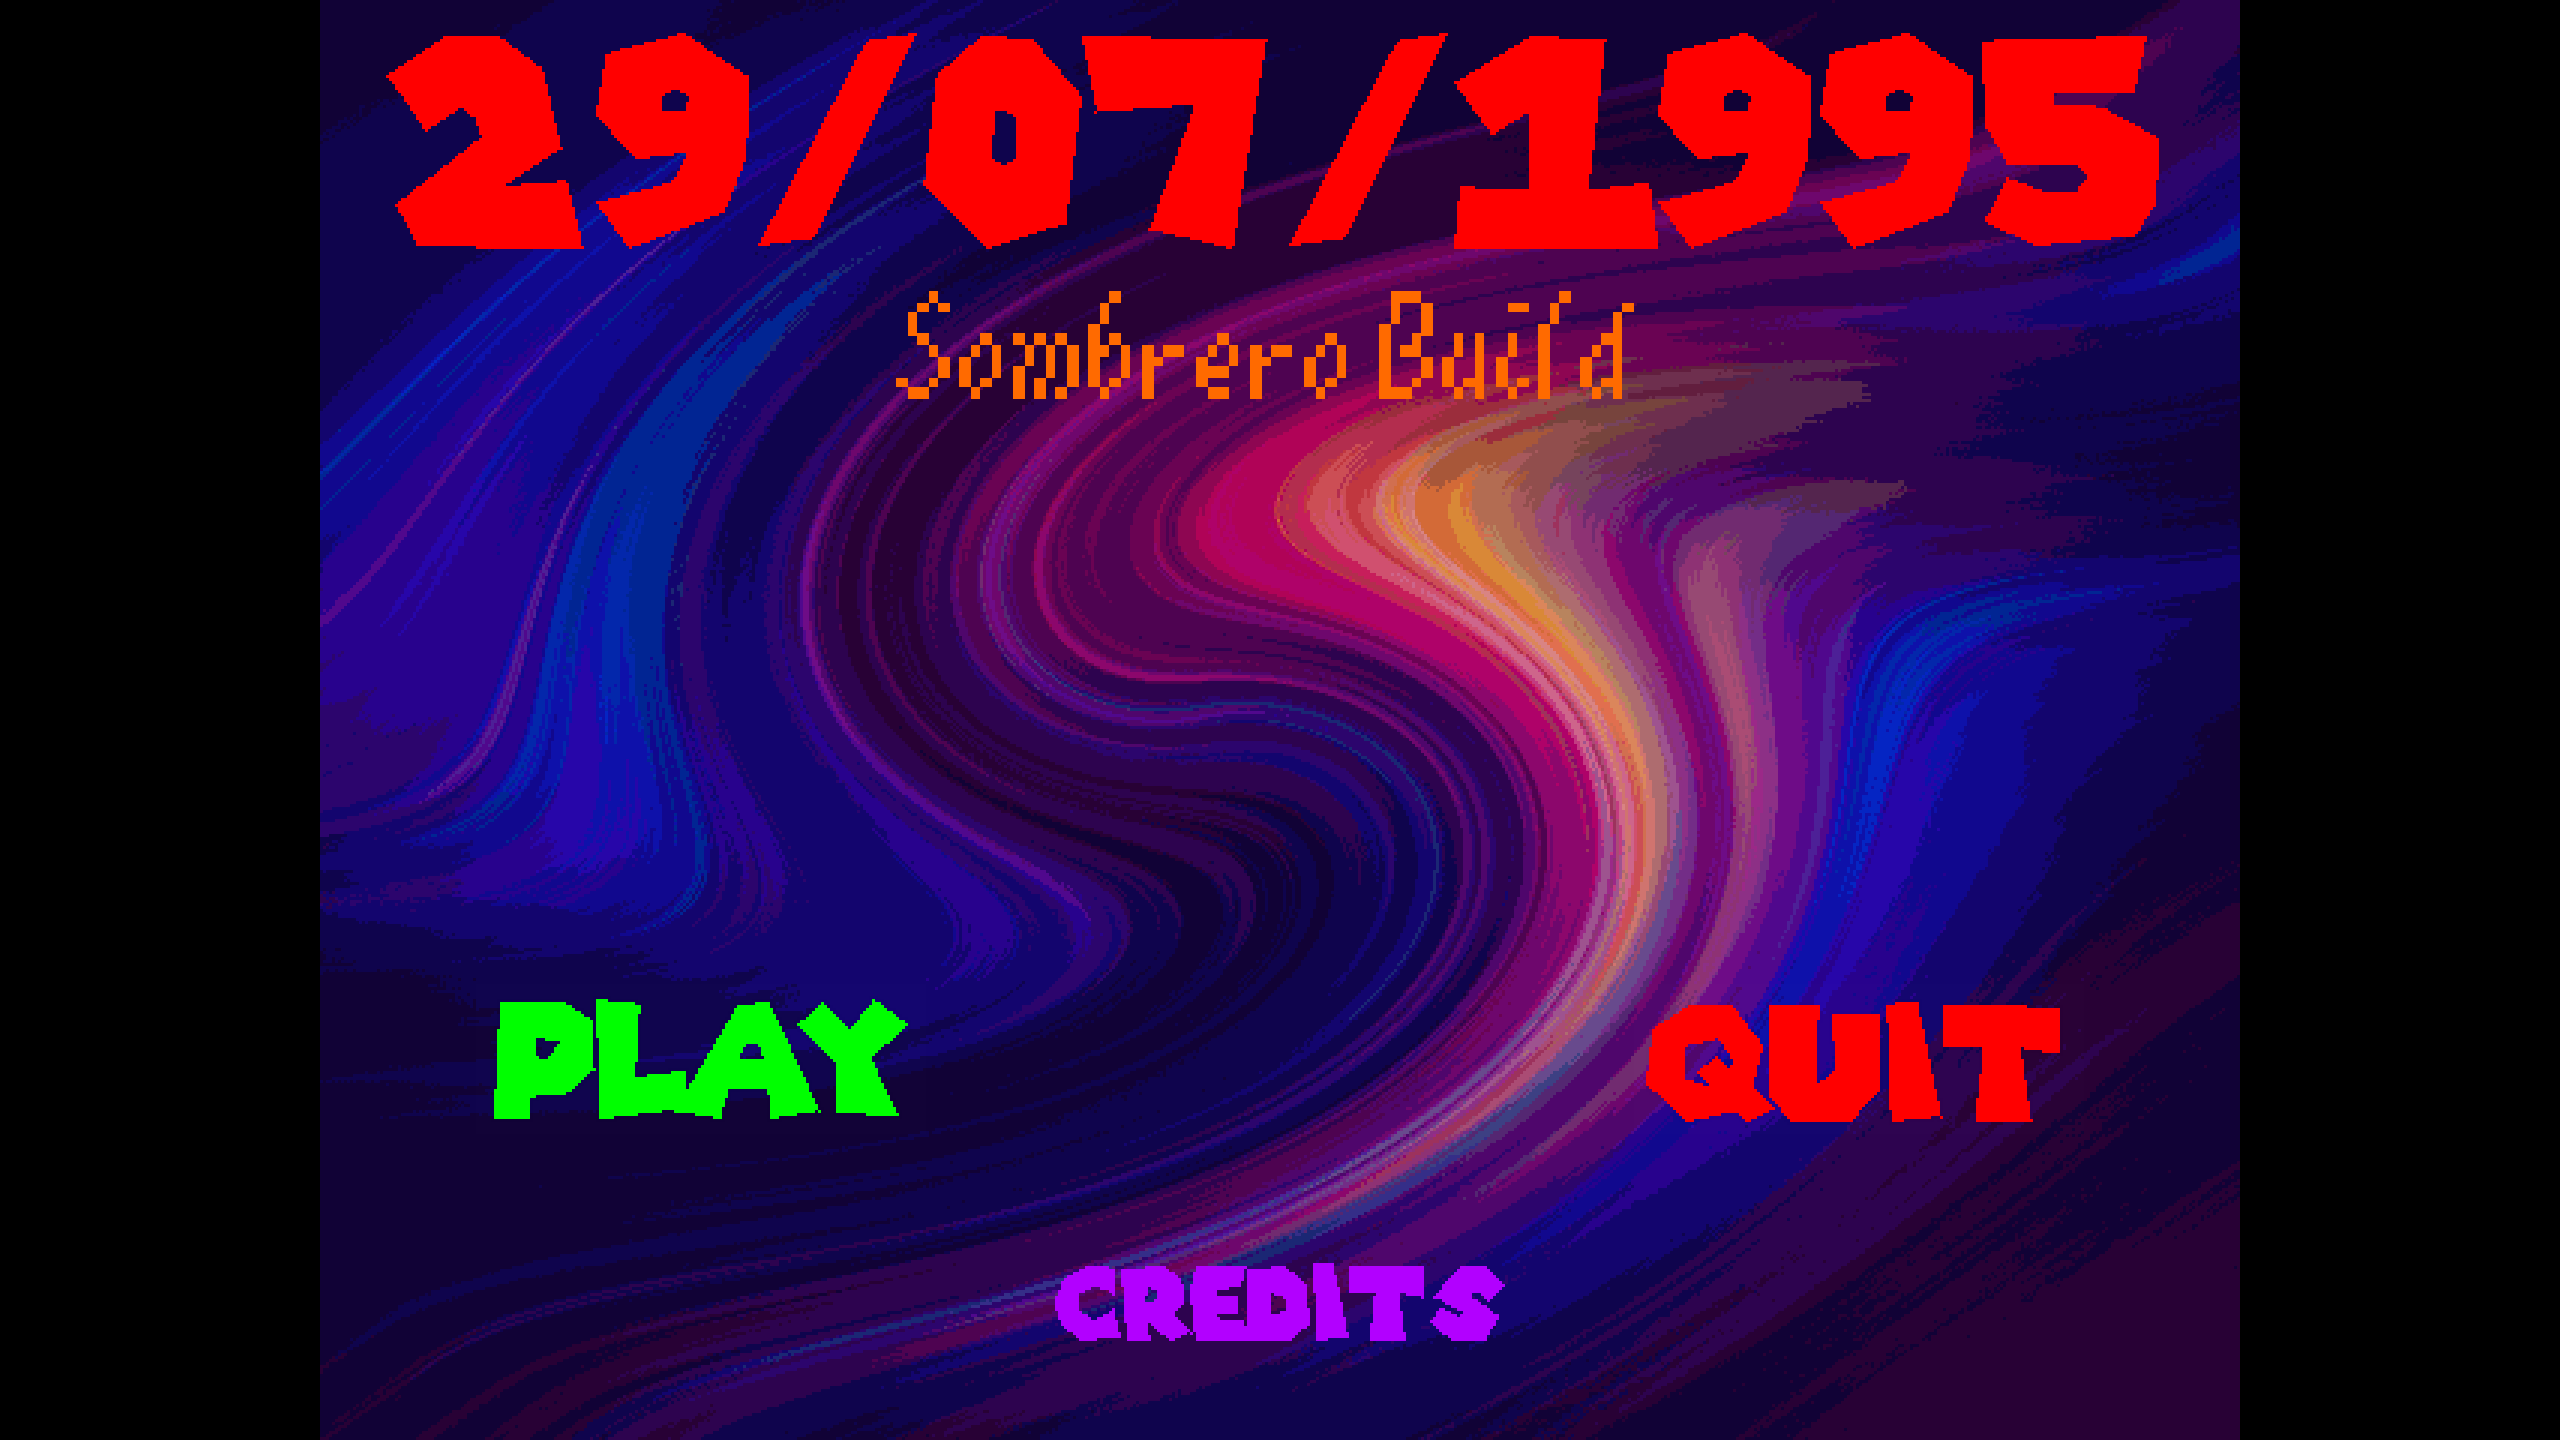 29/07/1995 Sombrero Build